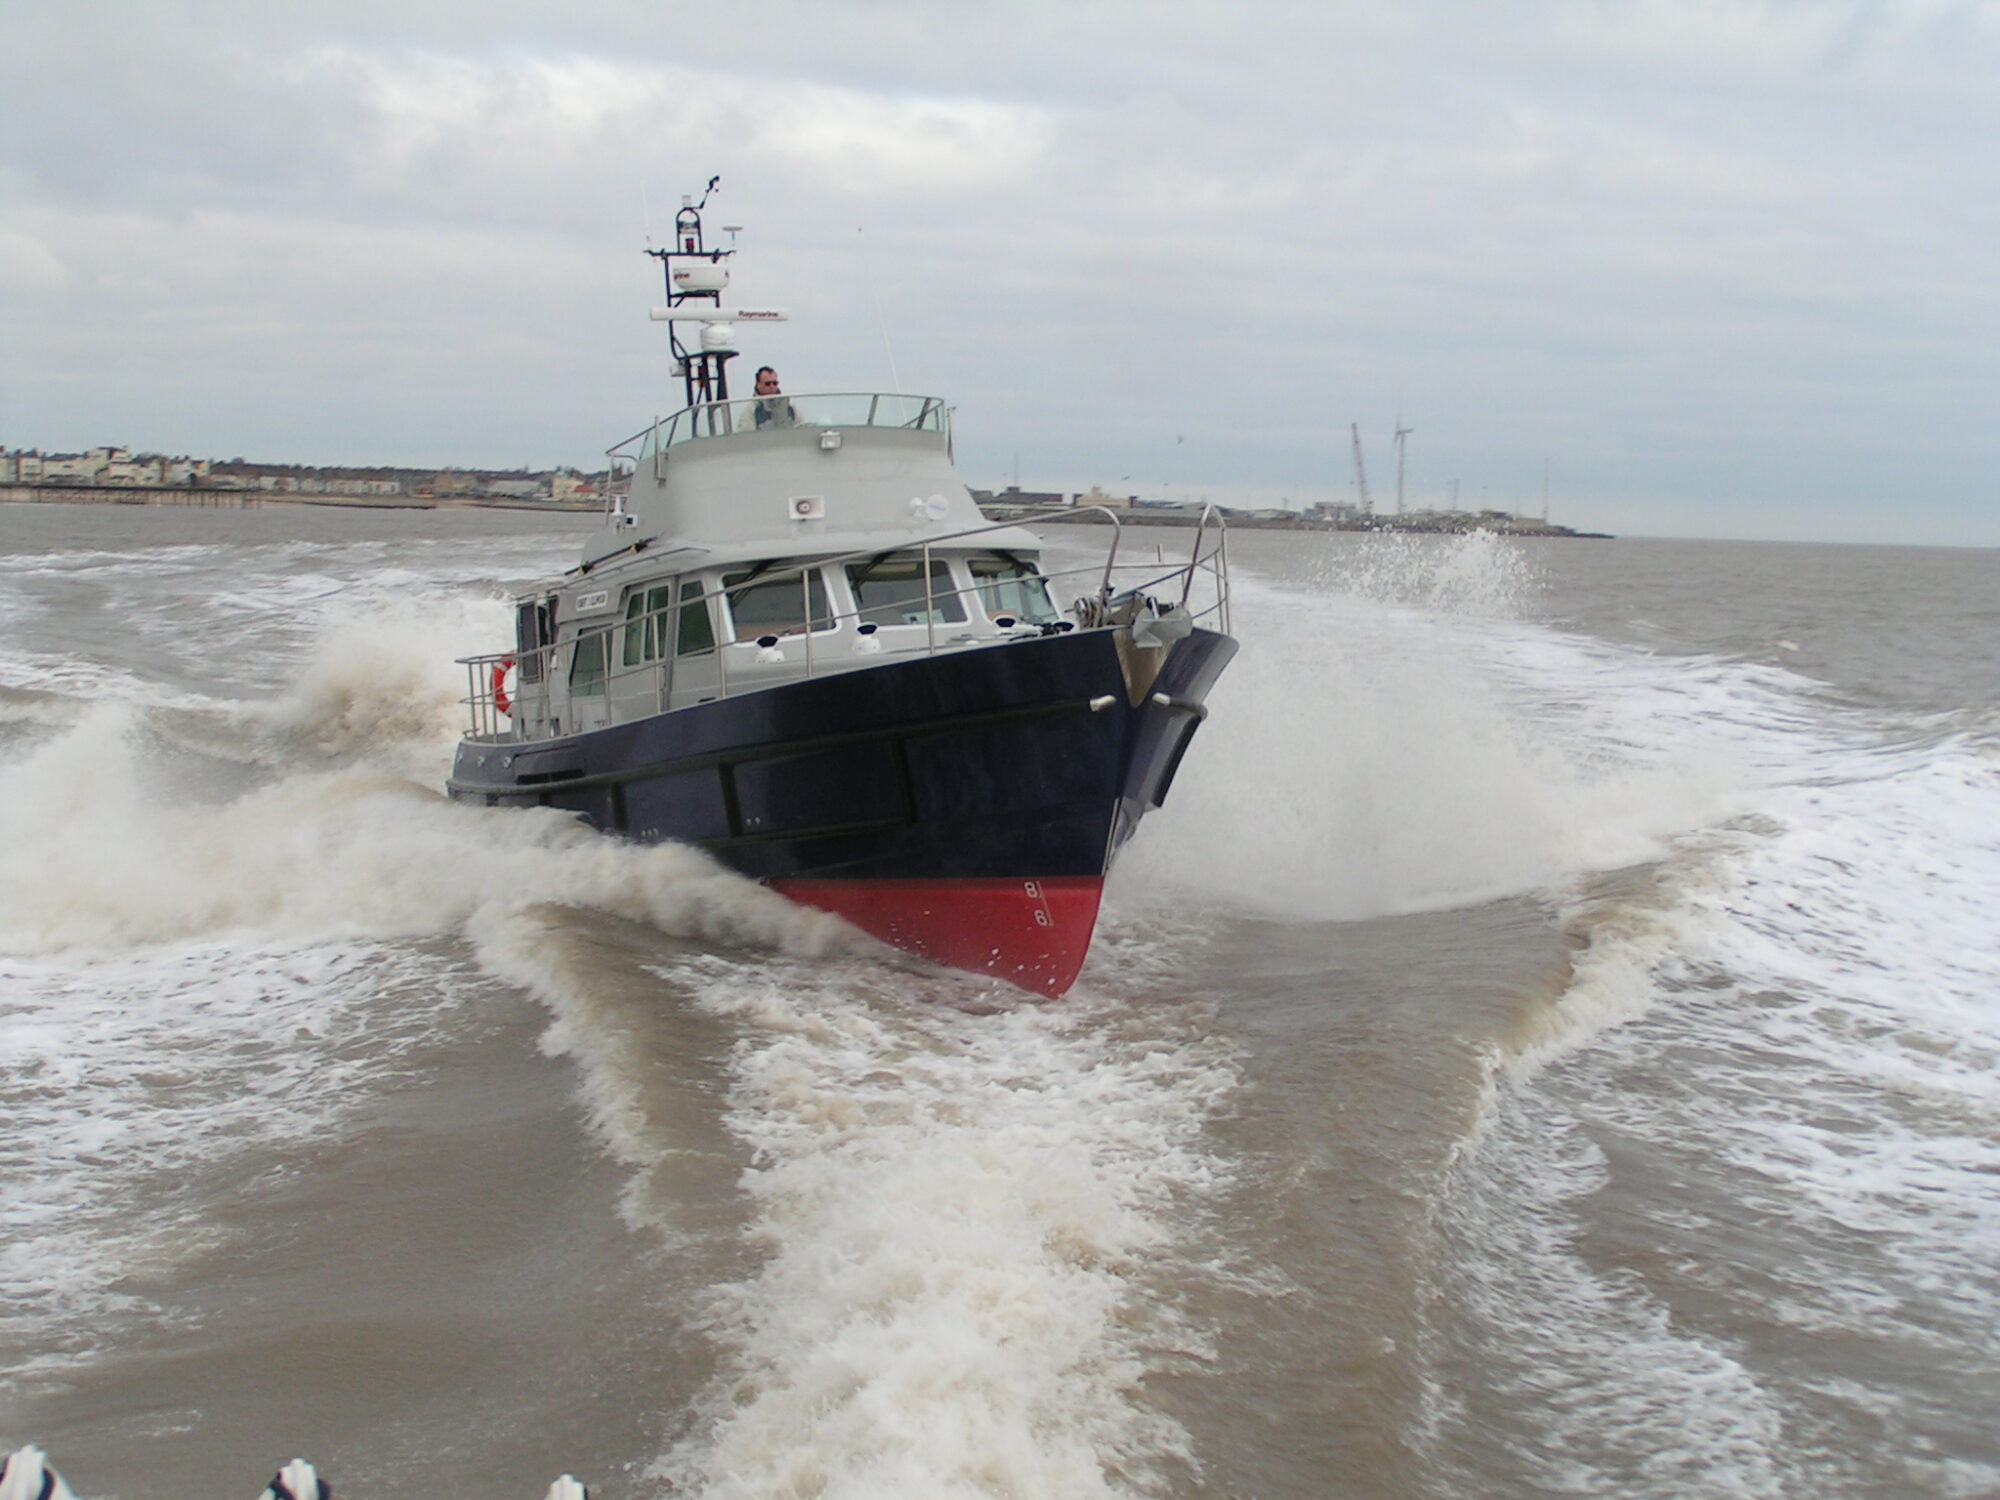 Hardy-RNLI-Lifeboat